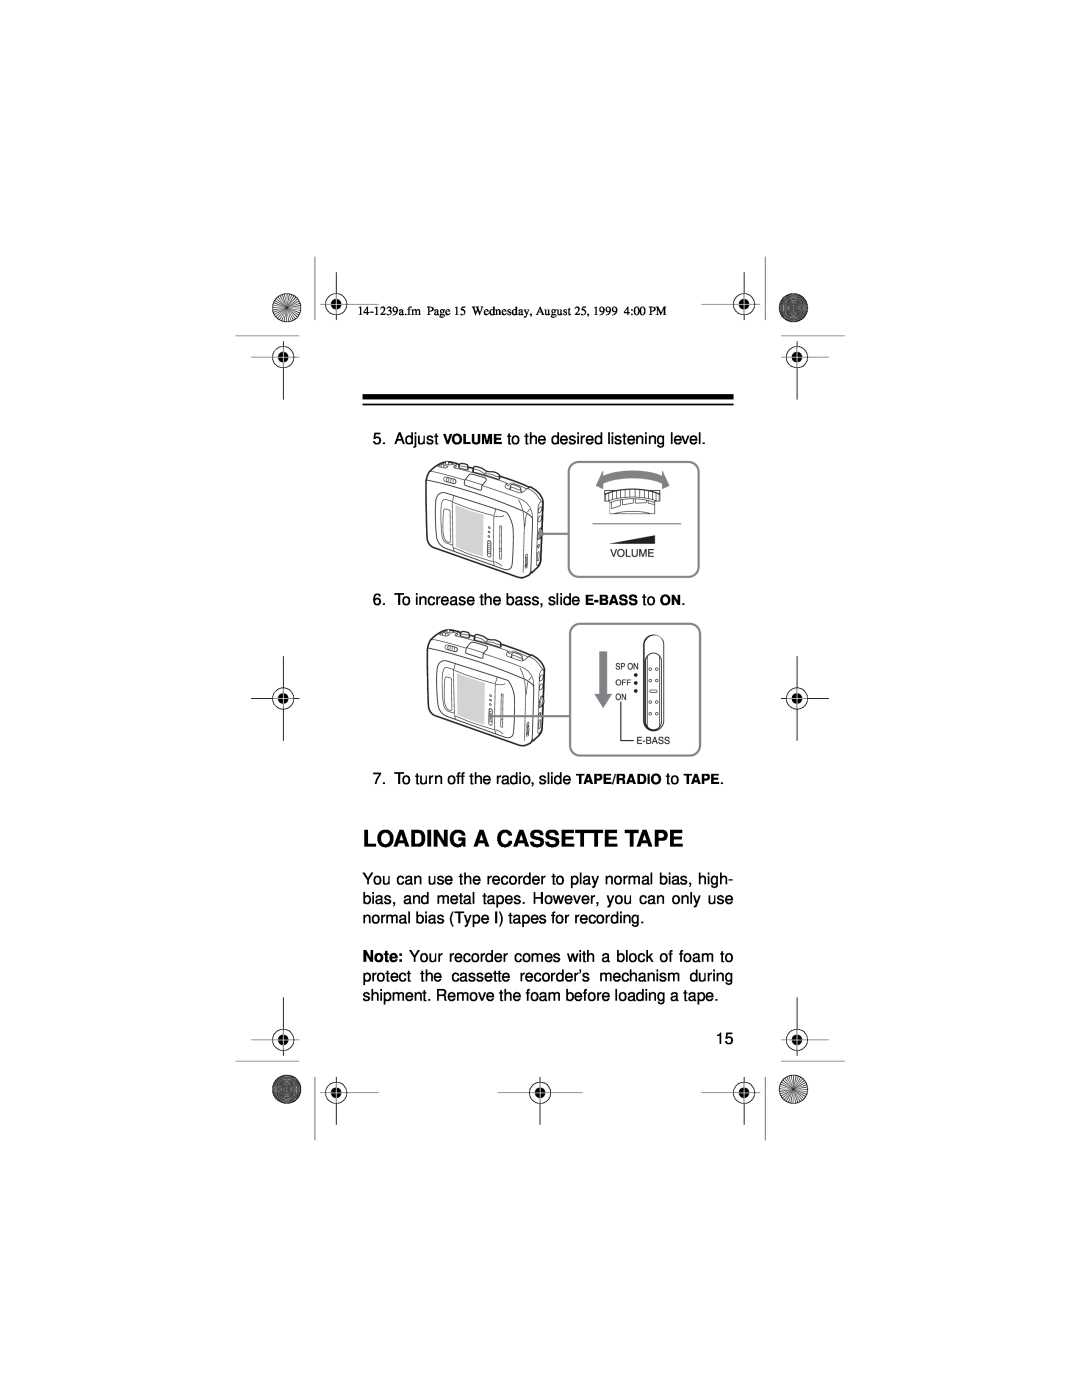 Optimus SCR-96 owner manual Loading A Cassette Tape 